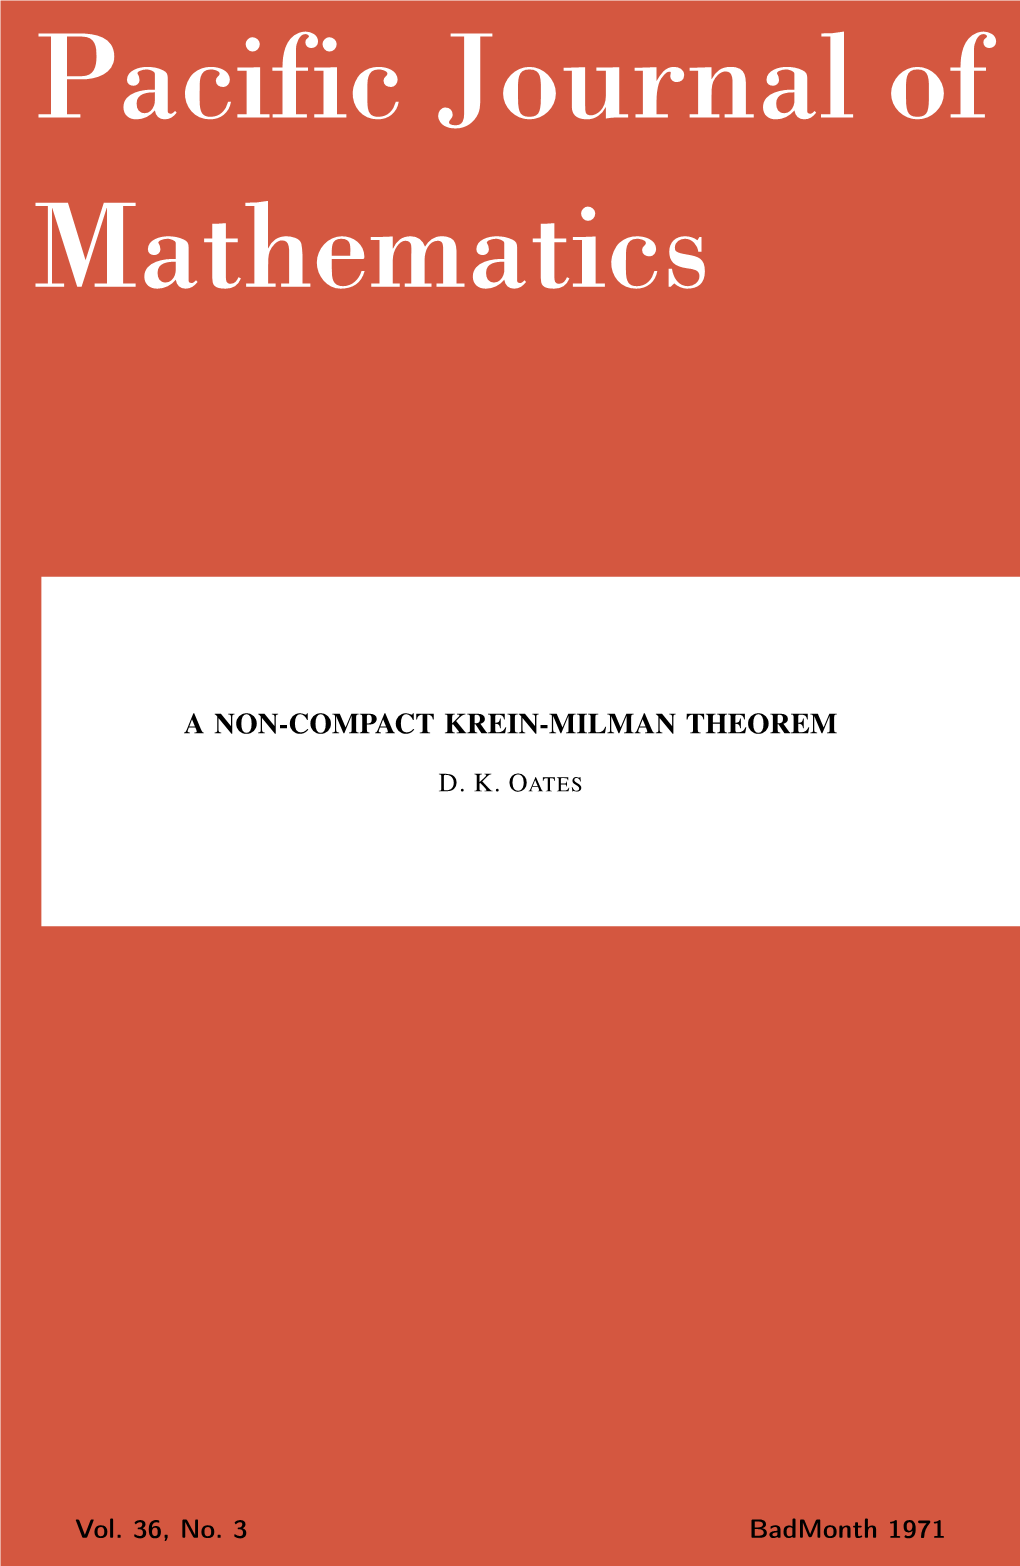 A Non-Compact Krein-Milman Theorem